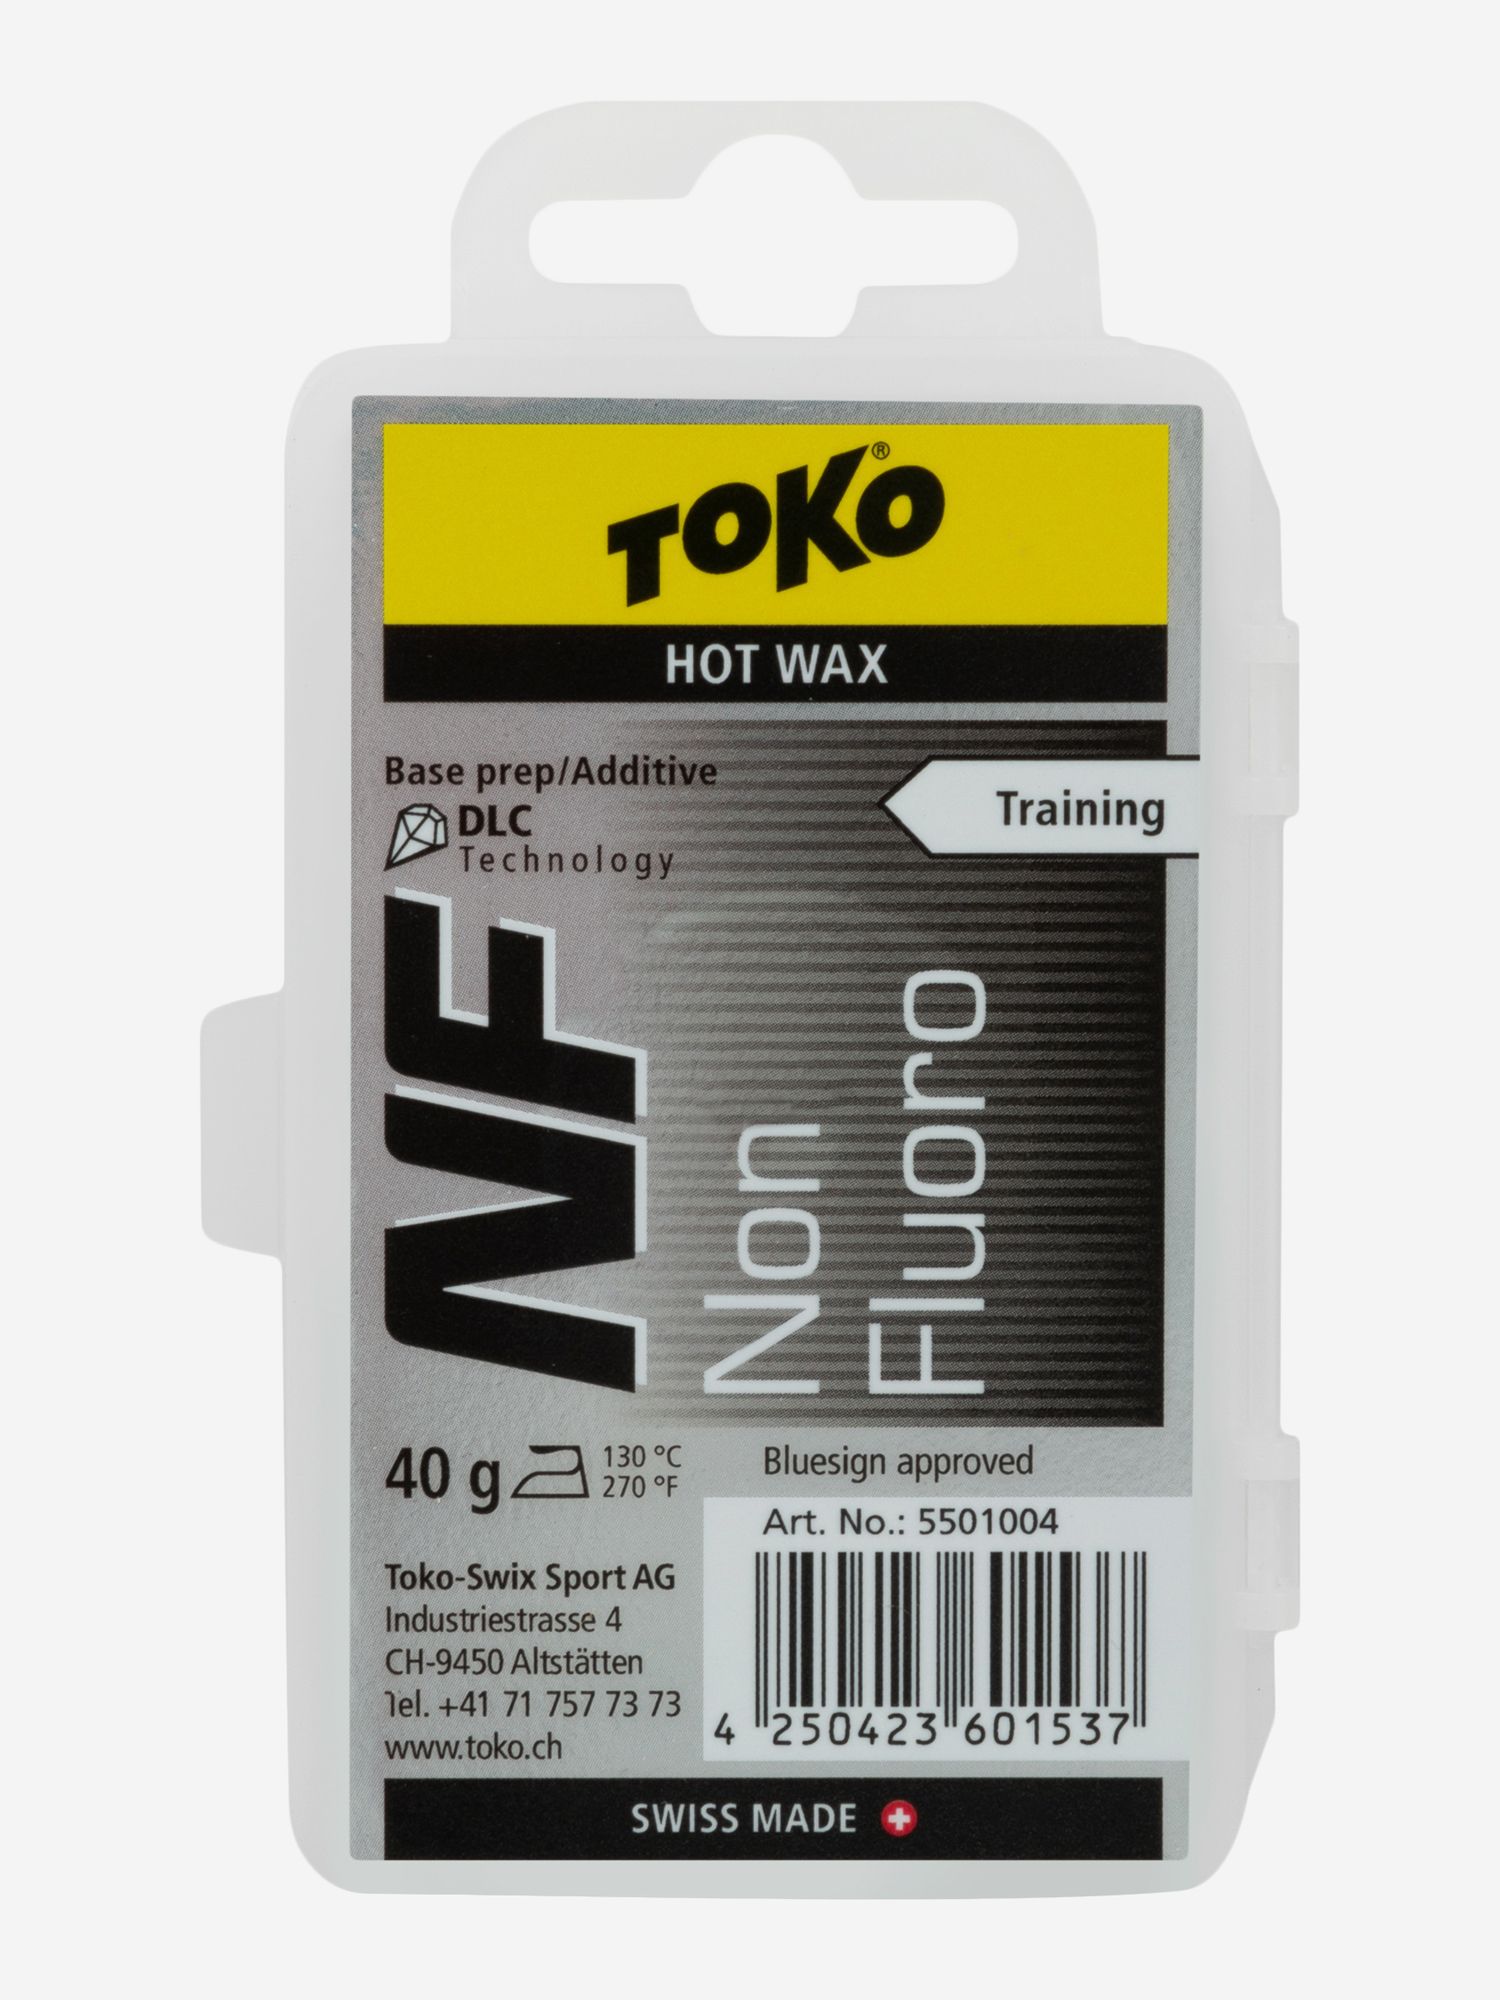 TOKO Парафин базовый TOKO NF TRAINING DLC HOT WAX BLACK, 40 г, уценка Артикул: 5501004уц